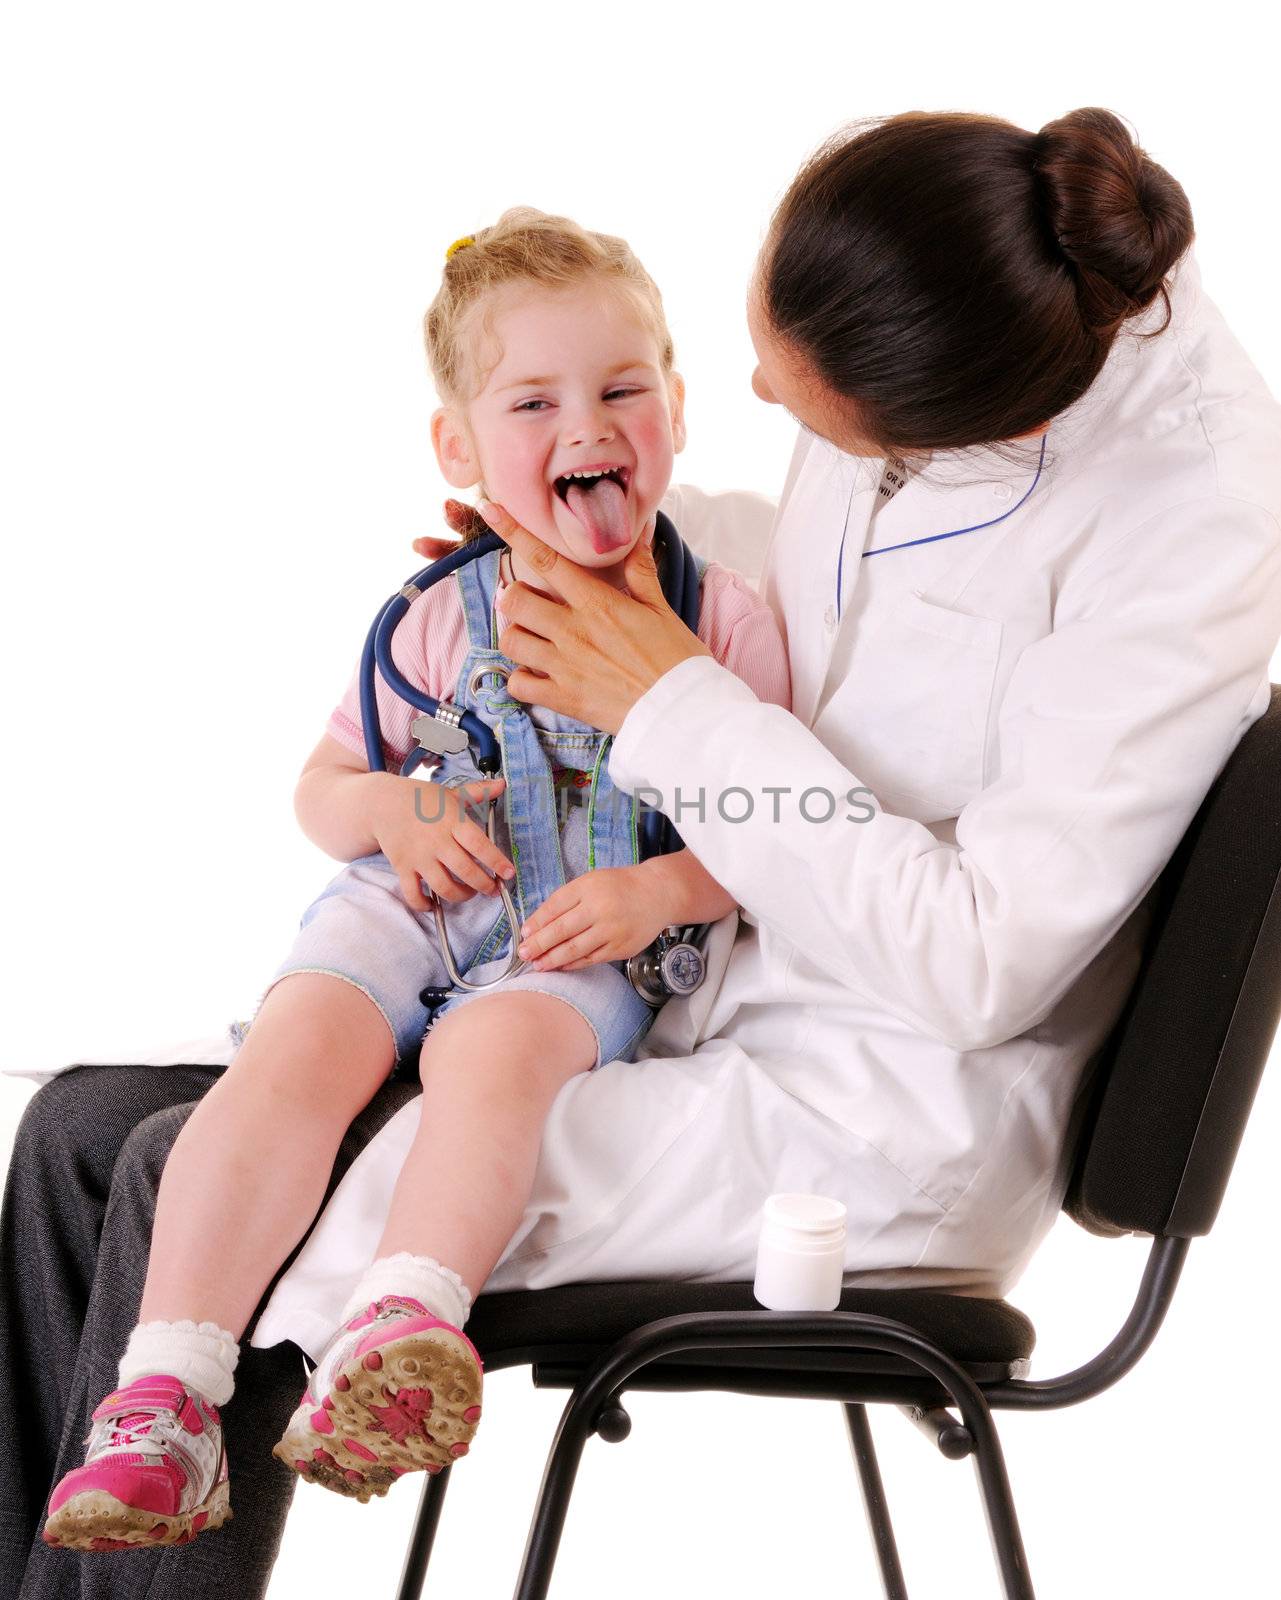 Child and doctor:throat checking by iryna_rasko